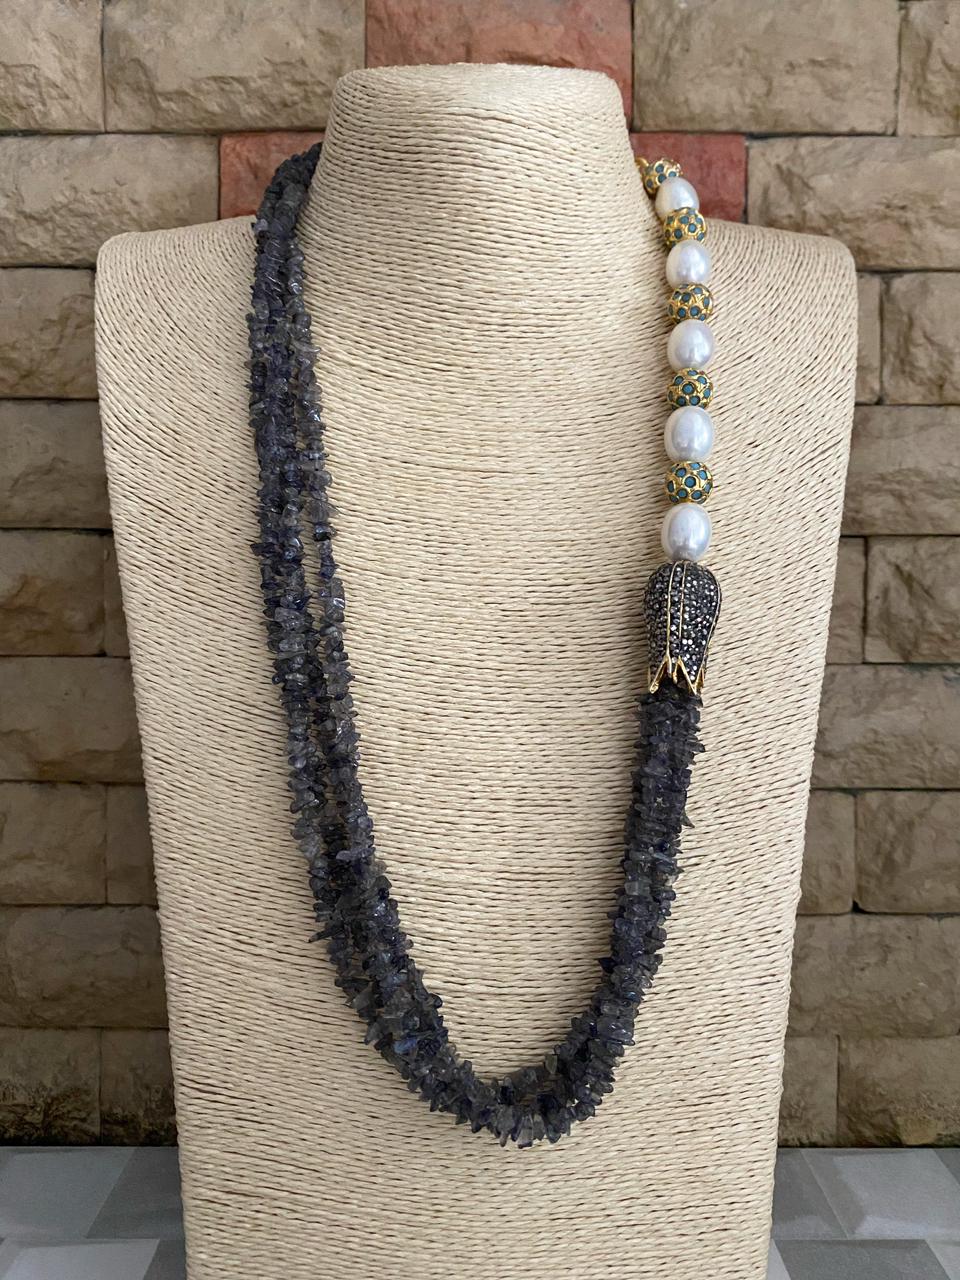 Buy Latest Beads Jewellery Designs Online For Women – Gehna Shop